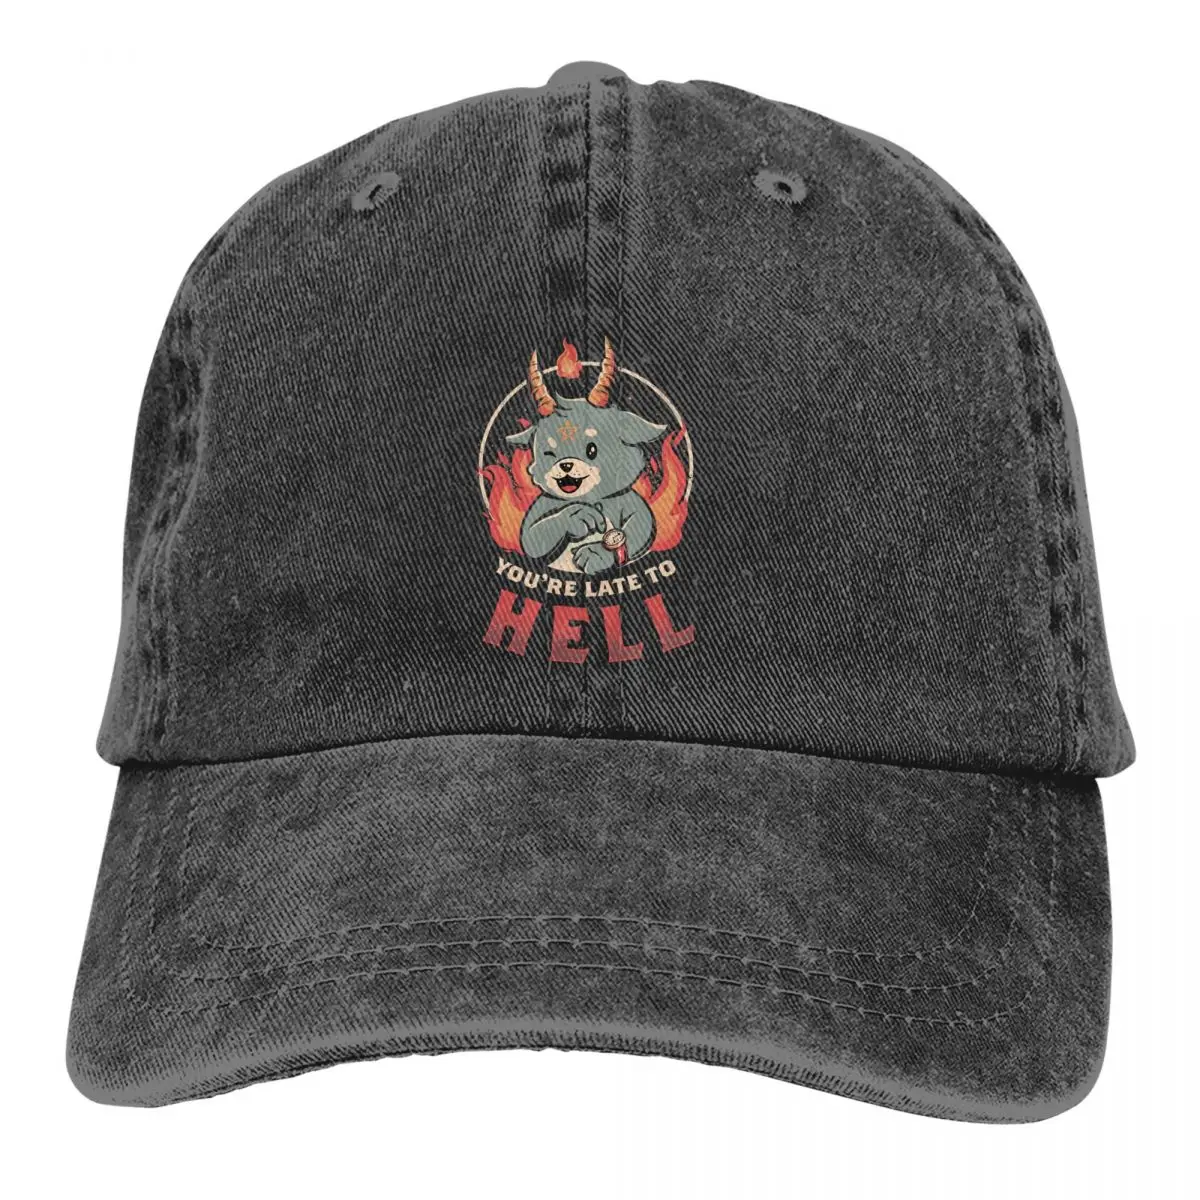 

Summer Cap Sun Visor Late To Hell Cute Evil Creepy Hip Hop Caps Baphomet Satan Lucifer Cowboy Hat Peaked Hats